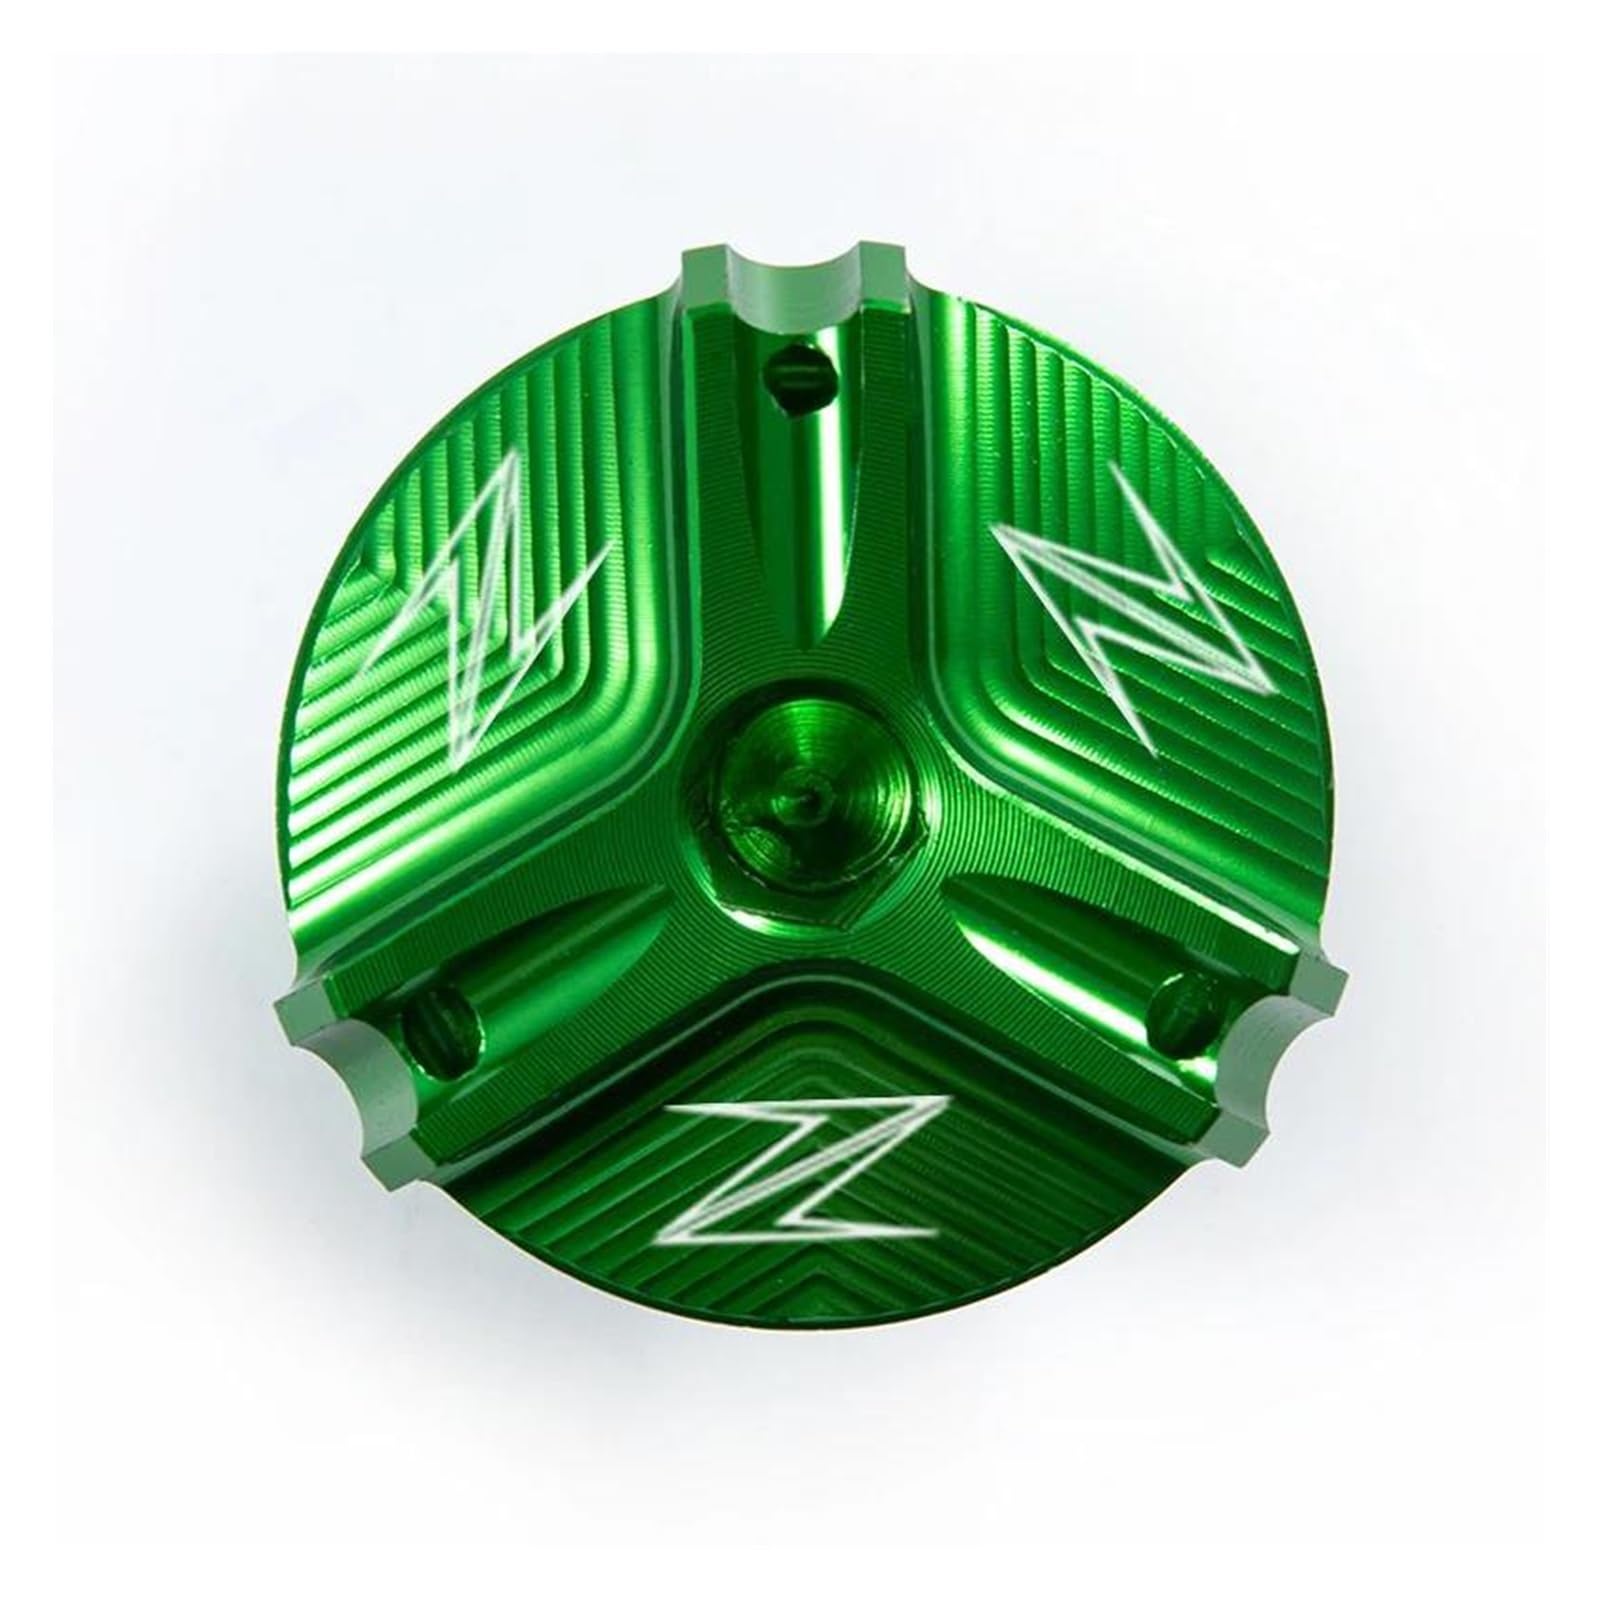 Öleinfüllschutzkappe Für KAWASAKI Z900 Z650 Z800 Z400 Z1000 Z1000R Z1000SX Z900RS Z125 Motoröl Kappe Schrauben Kraftstoff Tankdeckel Schutz(Green) von QIBOZNG